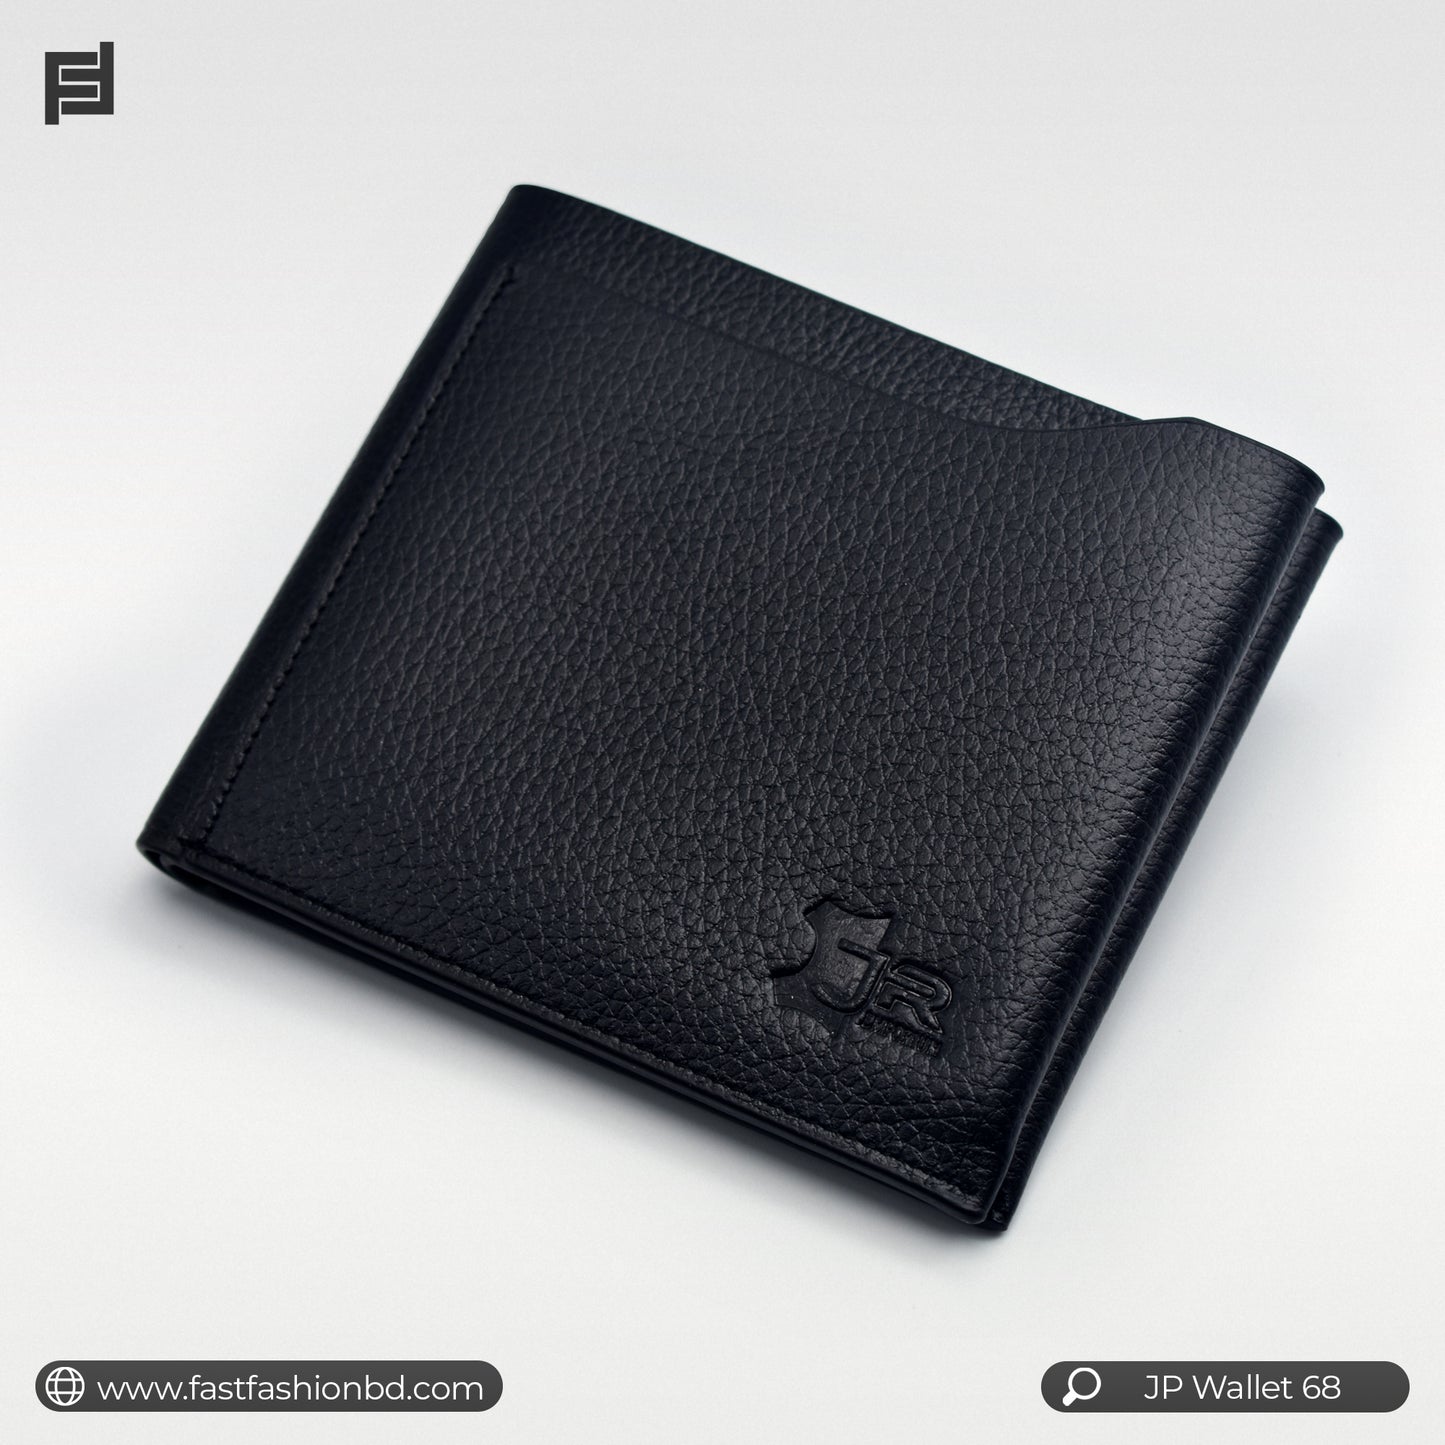 Original Leather Pocket Size Premium Quality Wallet | JP Wallet 68